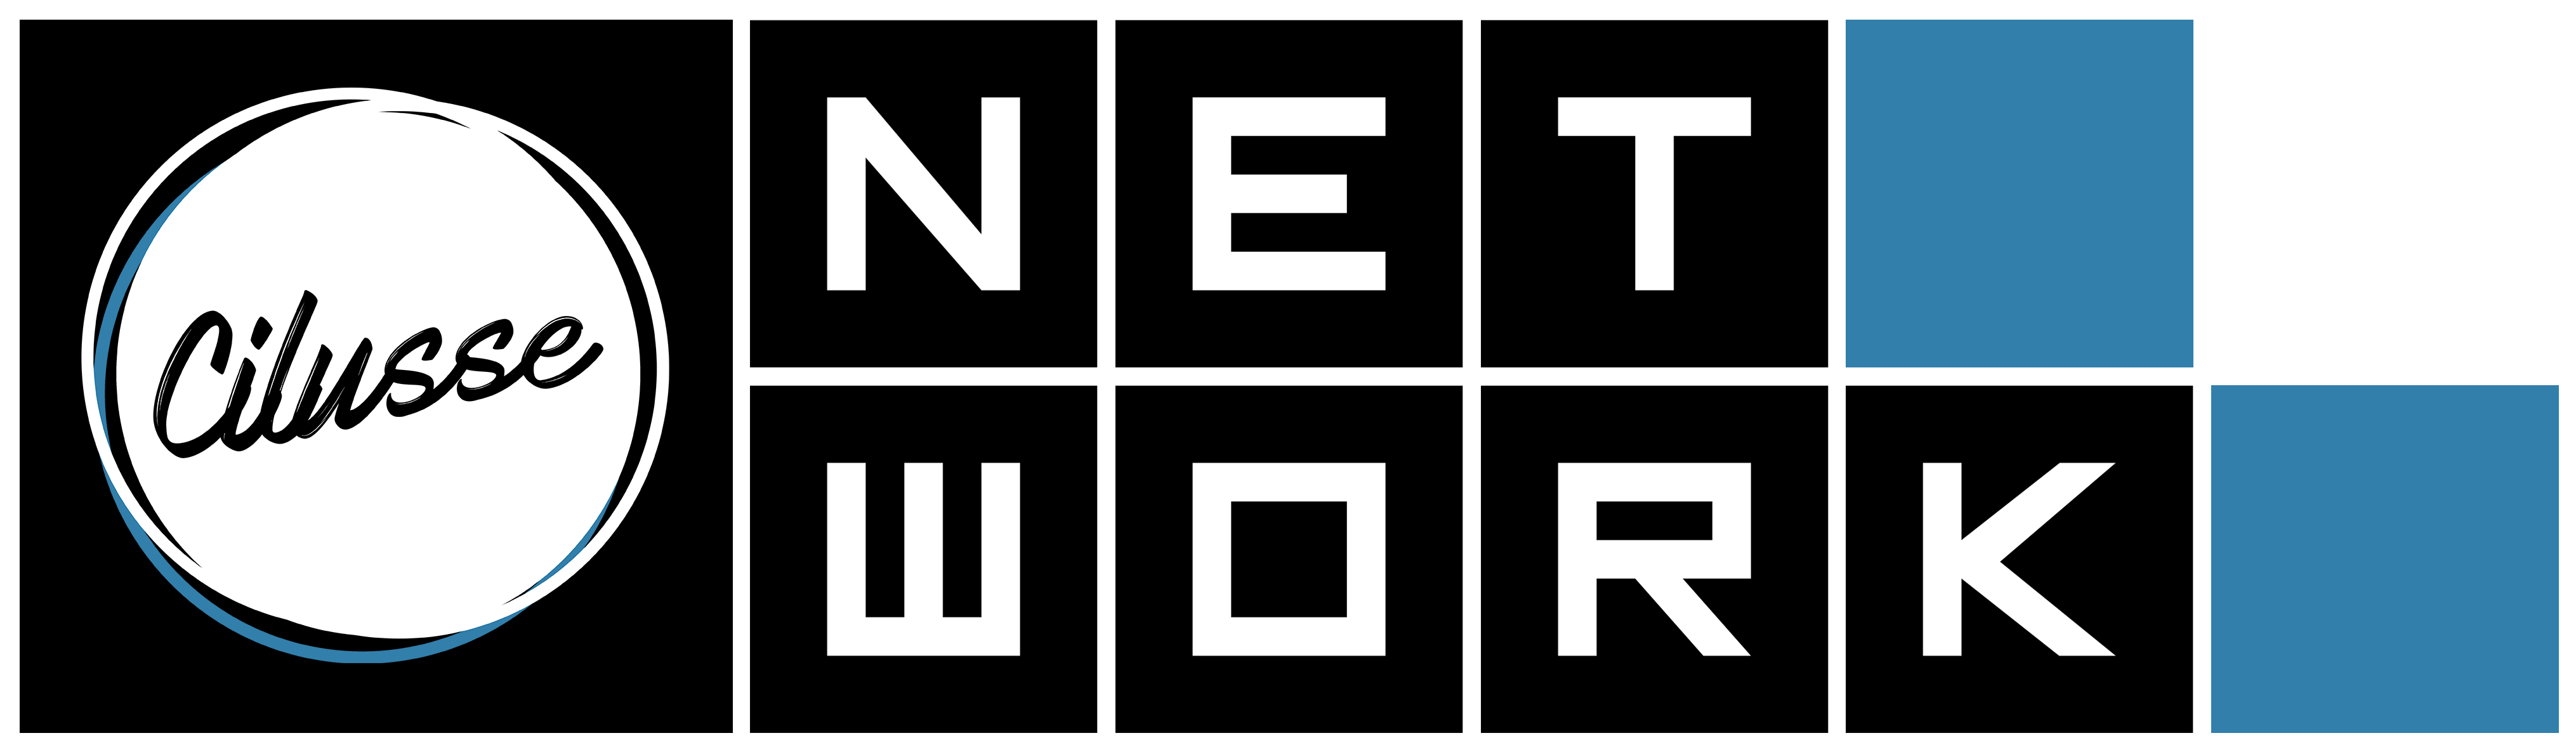 Cilusse Network Logo